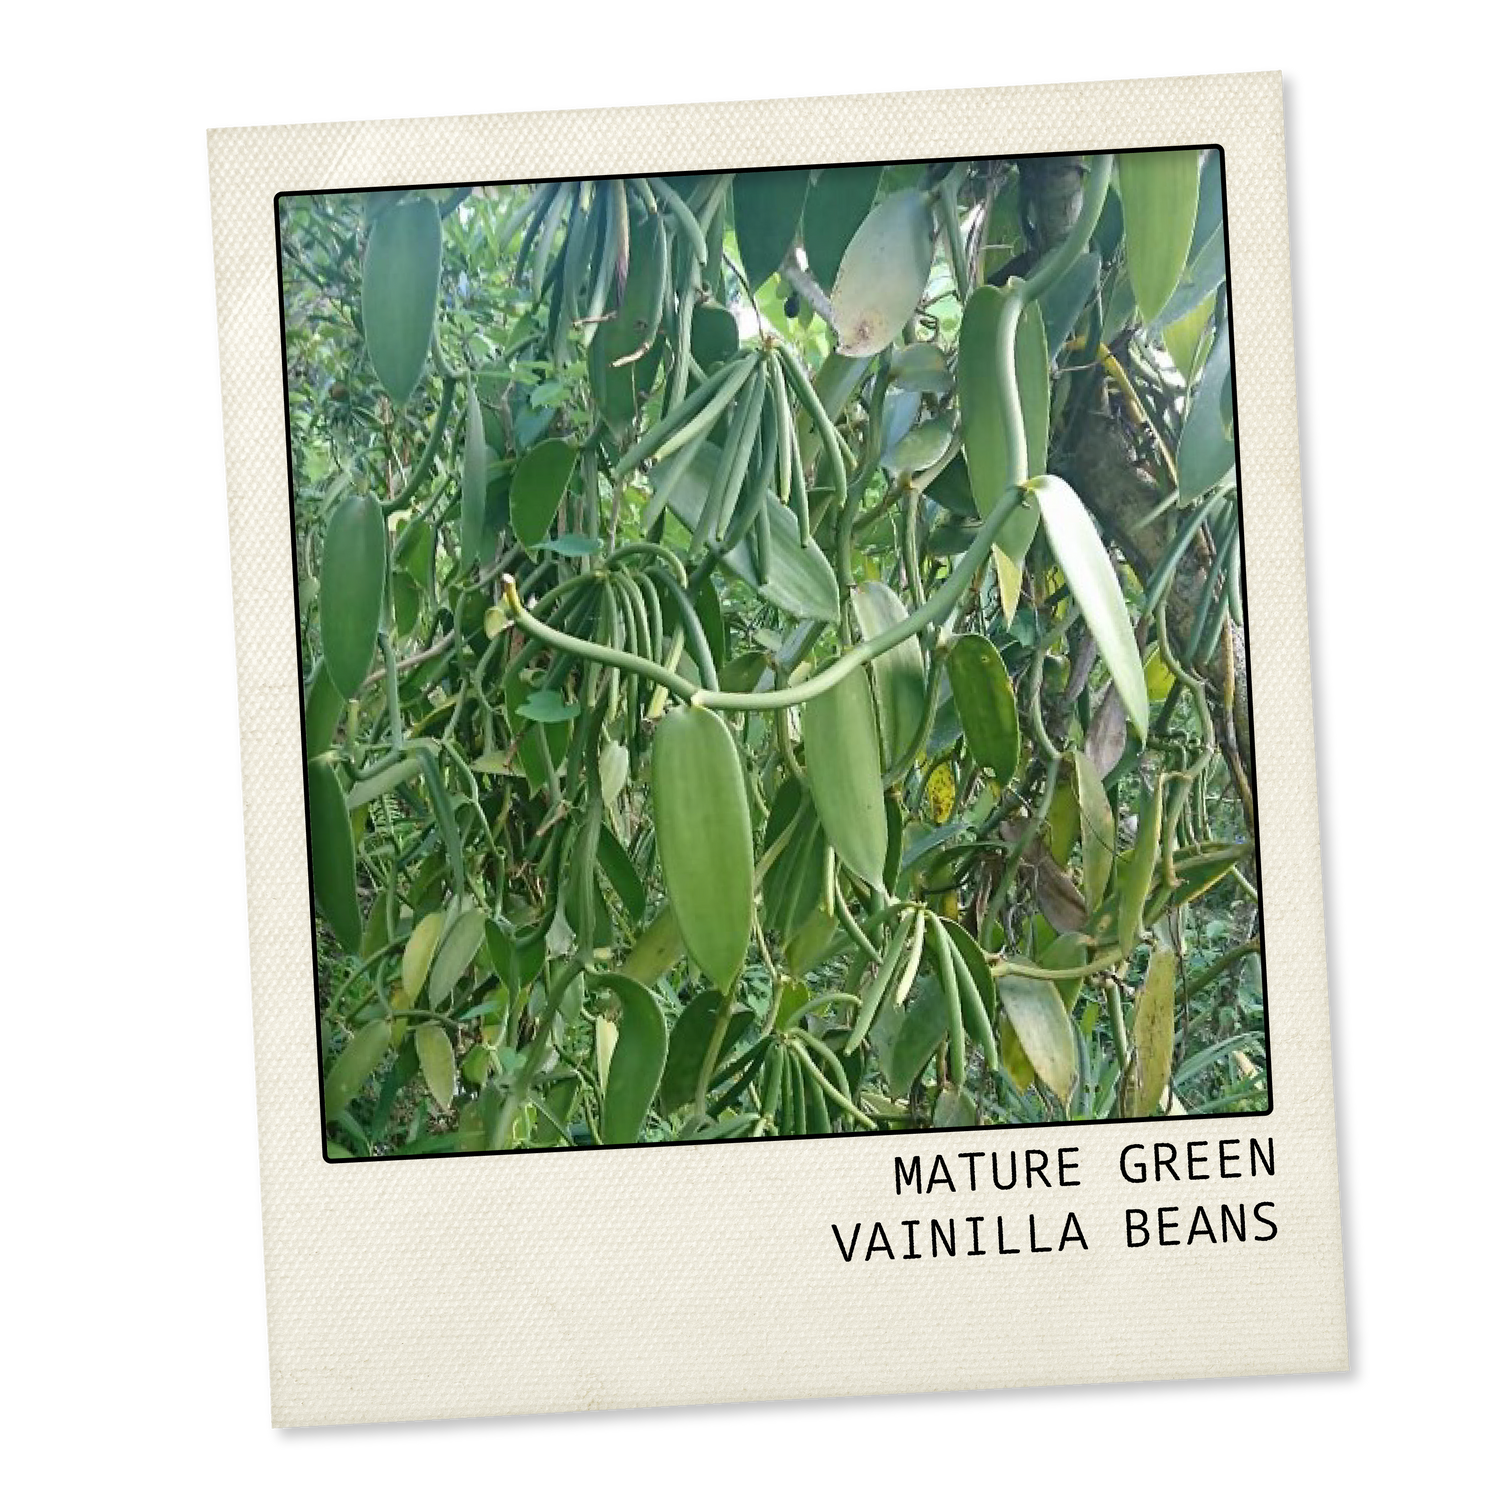 Mature green vanilla bean in the Comoros Islands.